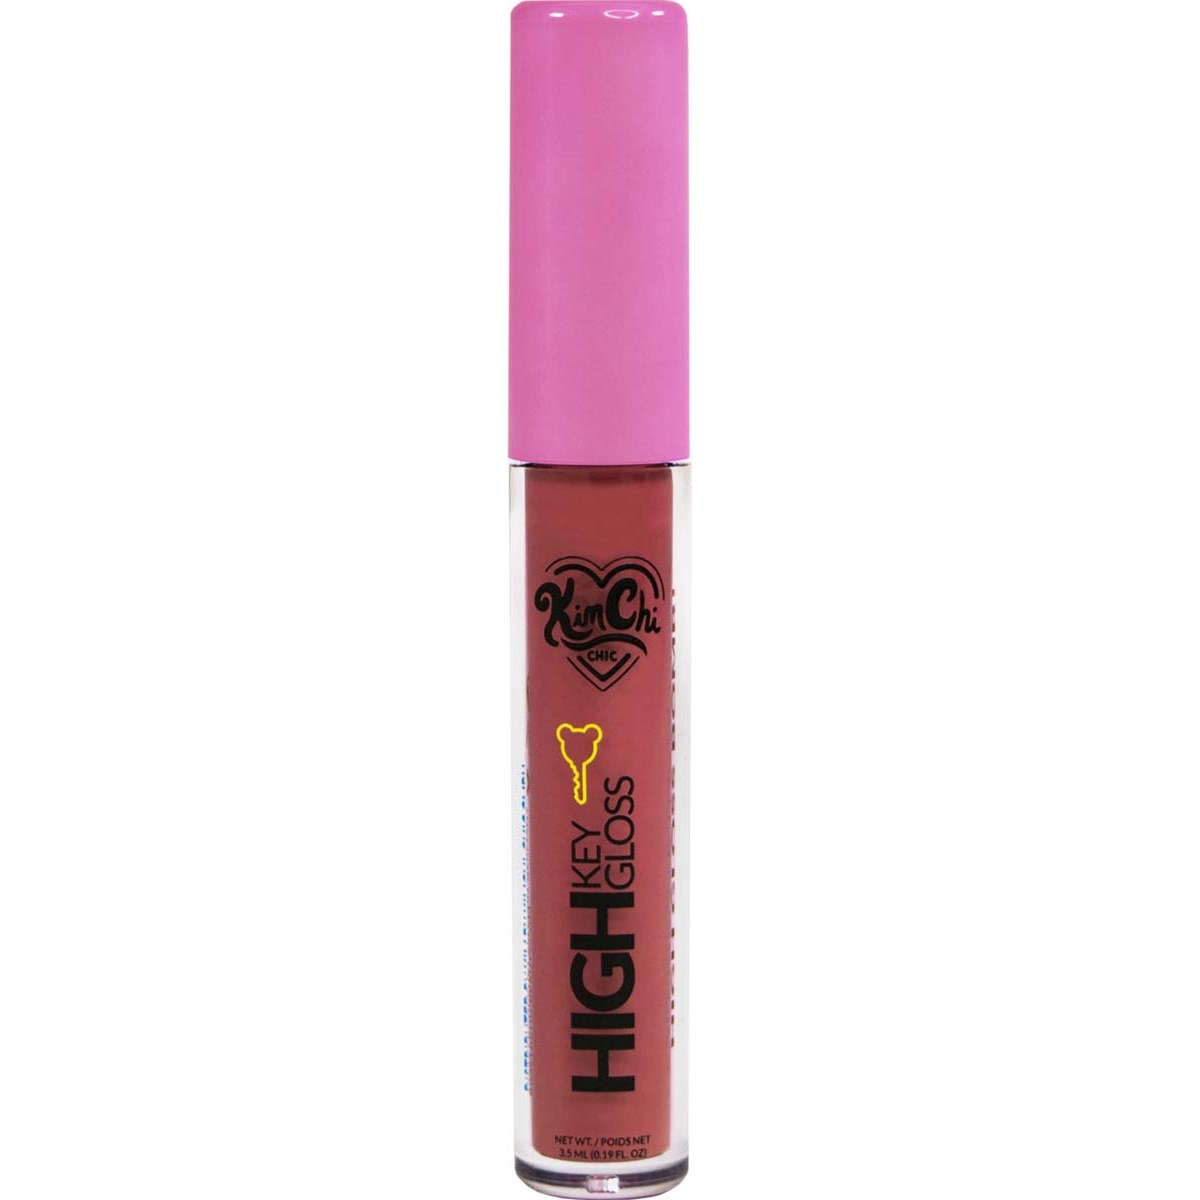 KimChi Chic High Key Gloss Full Coverage Lipgloss Summer Plum